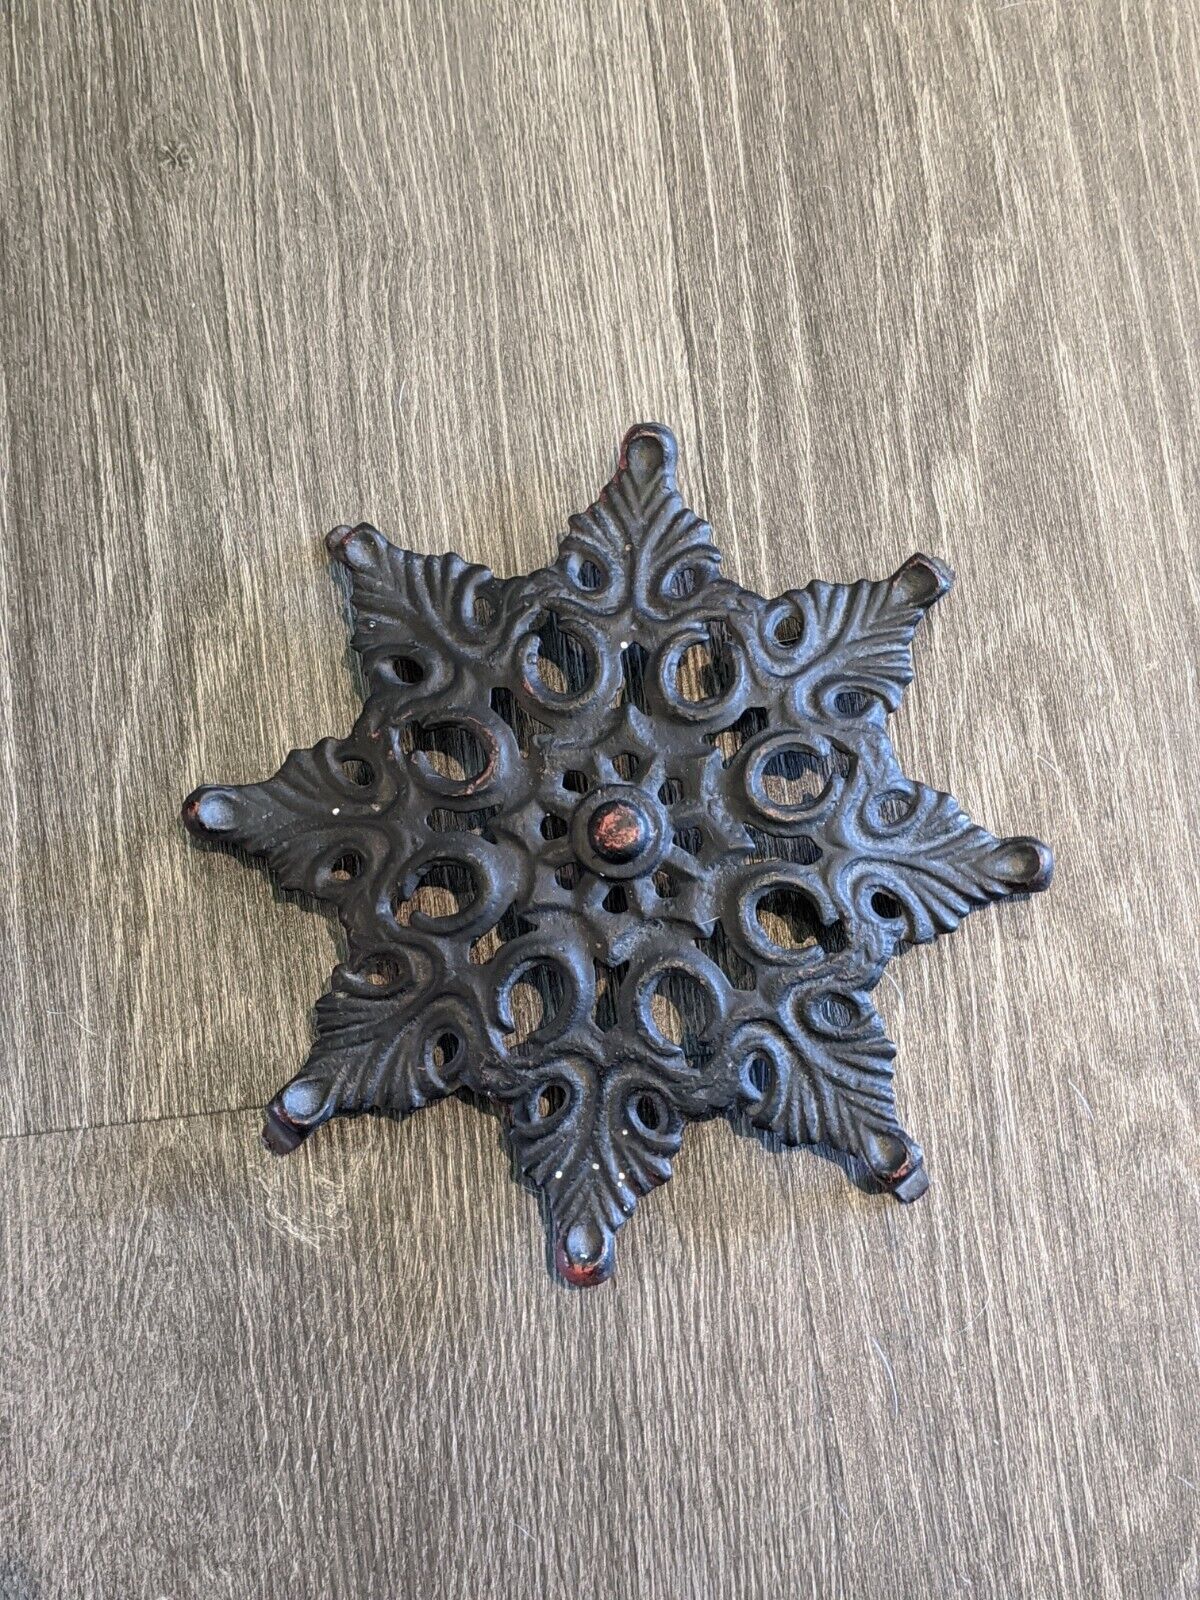 Antique cast iron star flower art deco